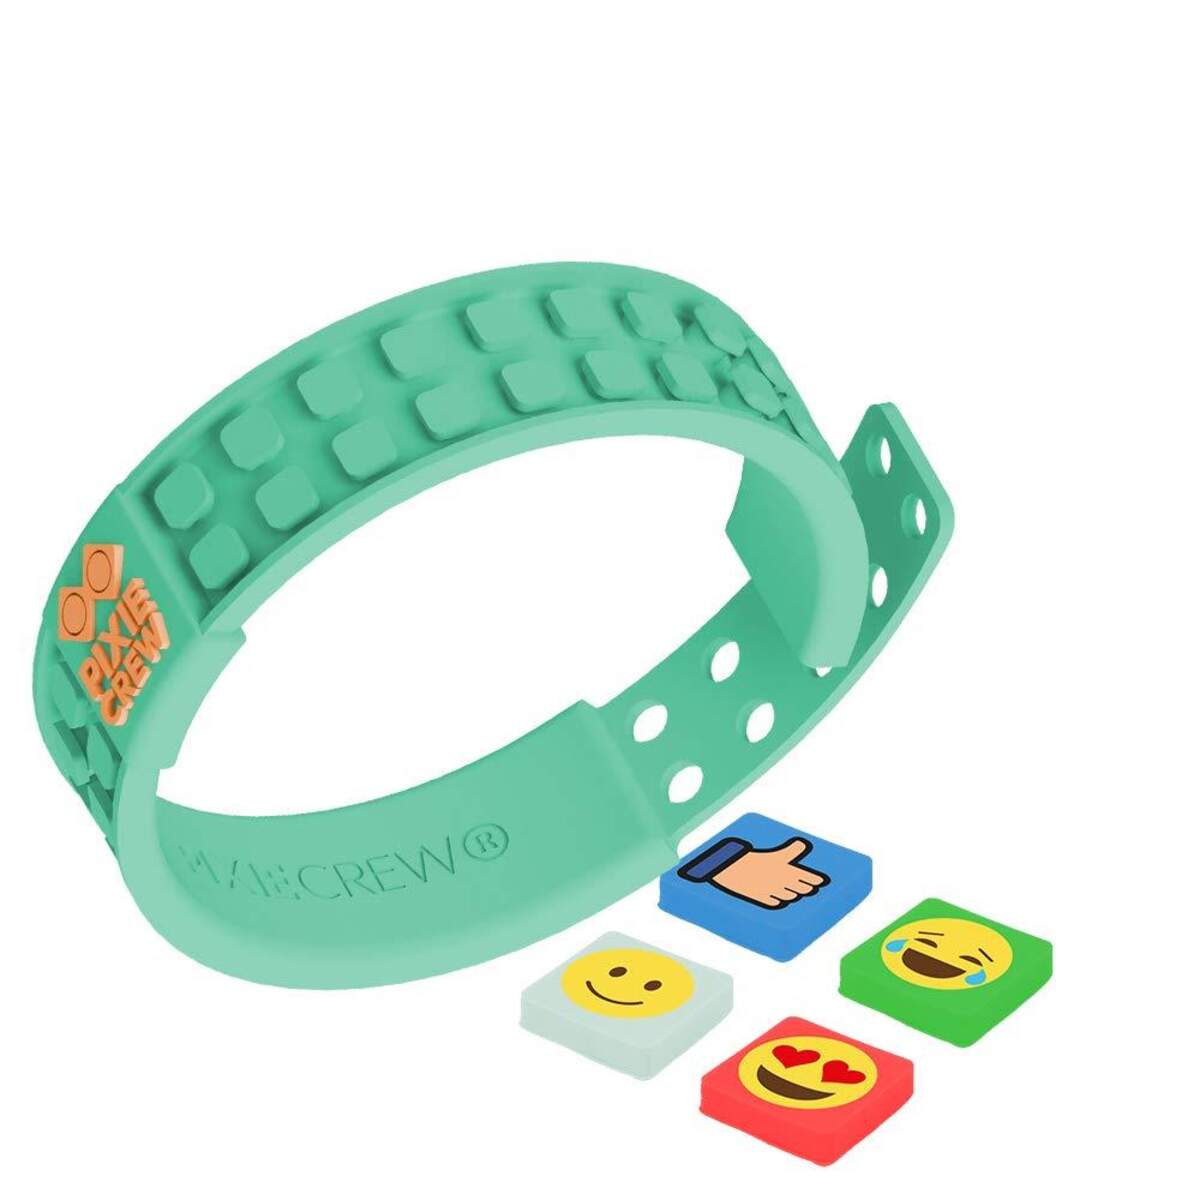 Pixie Armband türkis mit Pixel Noppen im Emoji Design